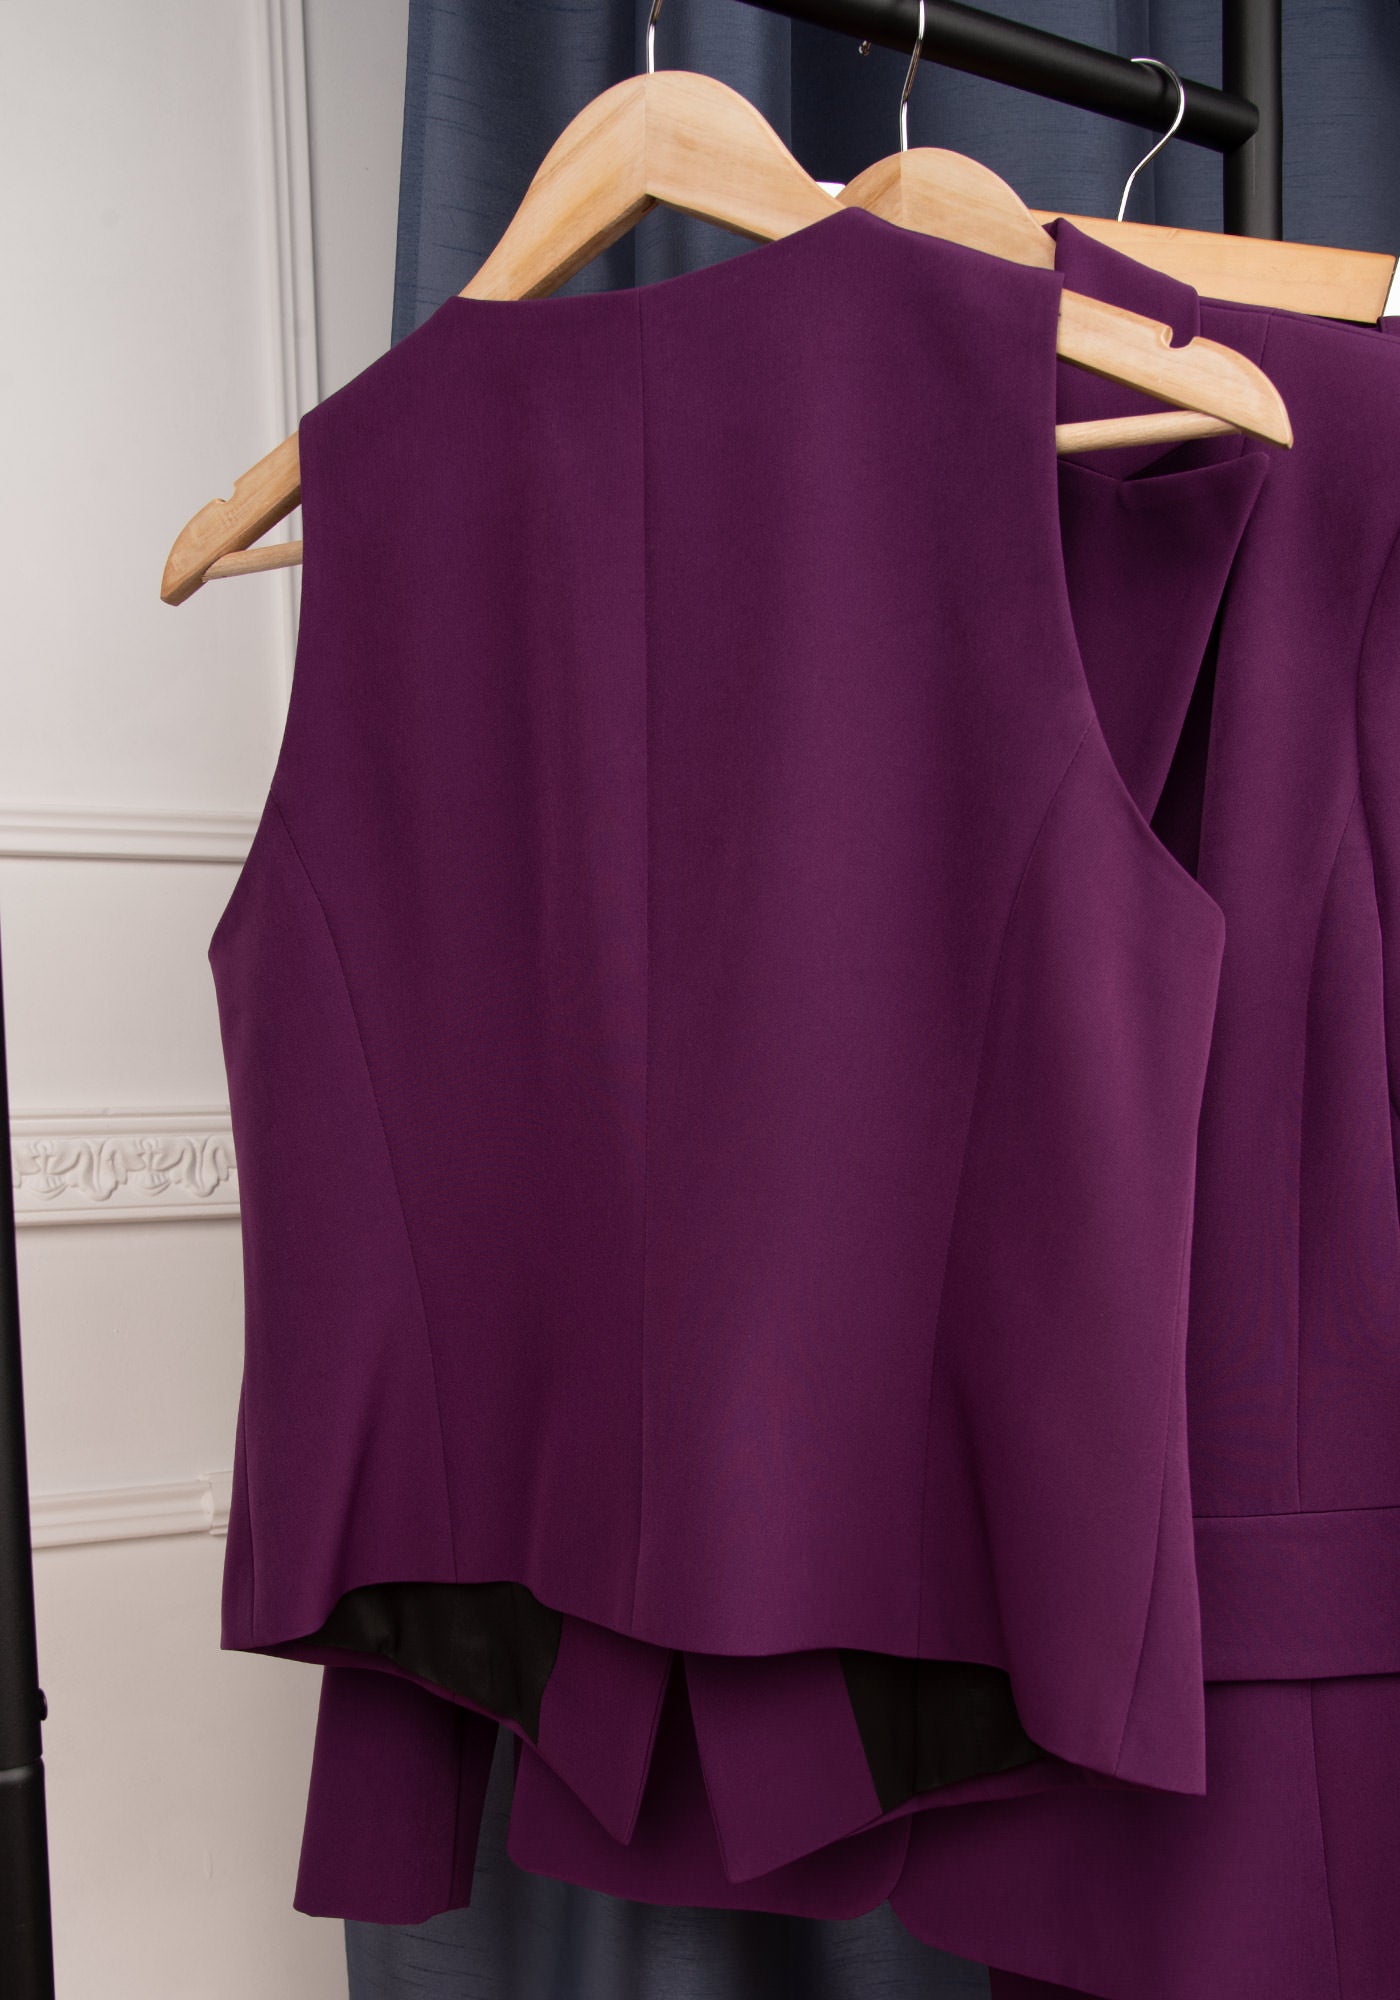 Single Breasted Tailored Women's Vest in Midnight Purple